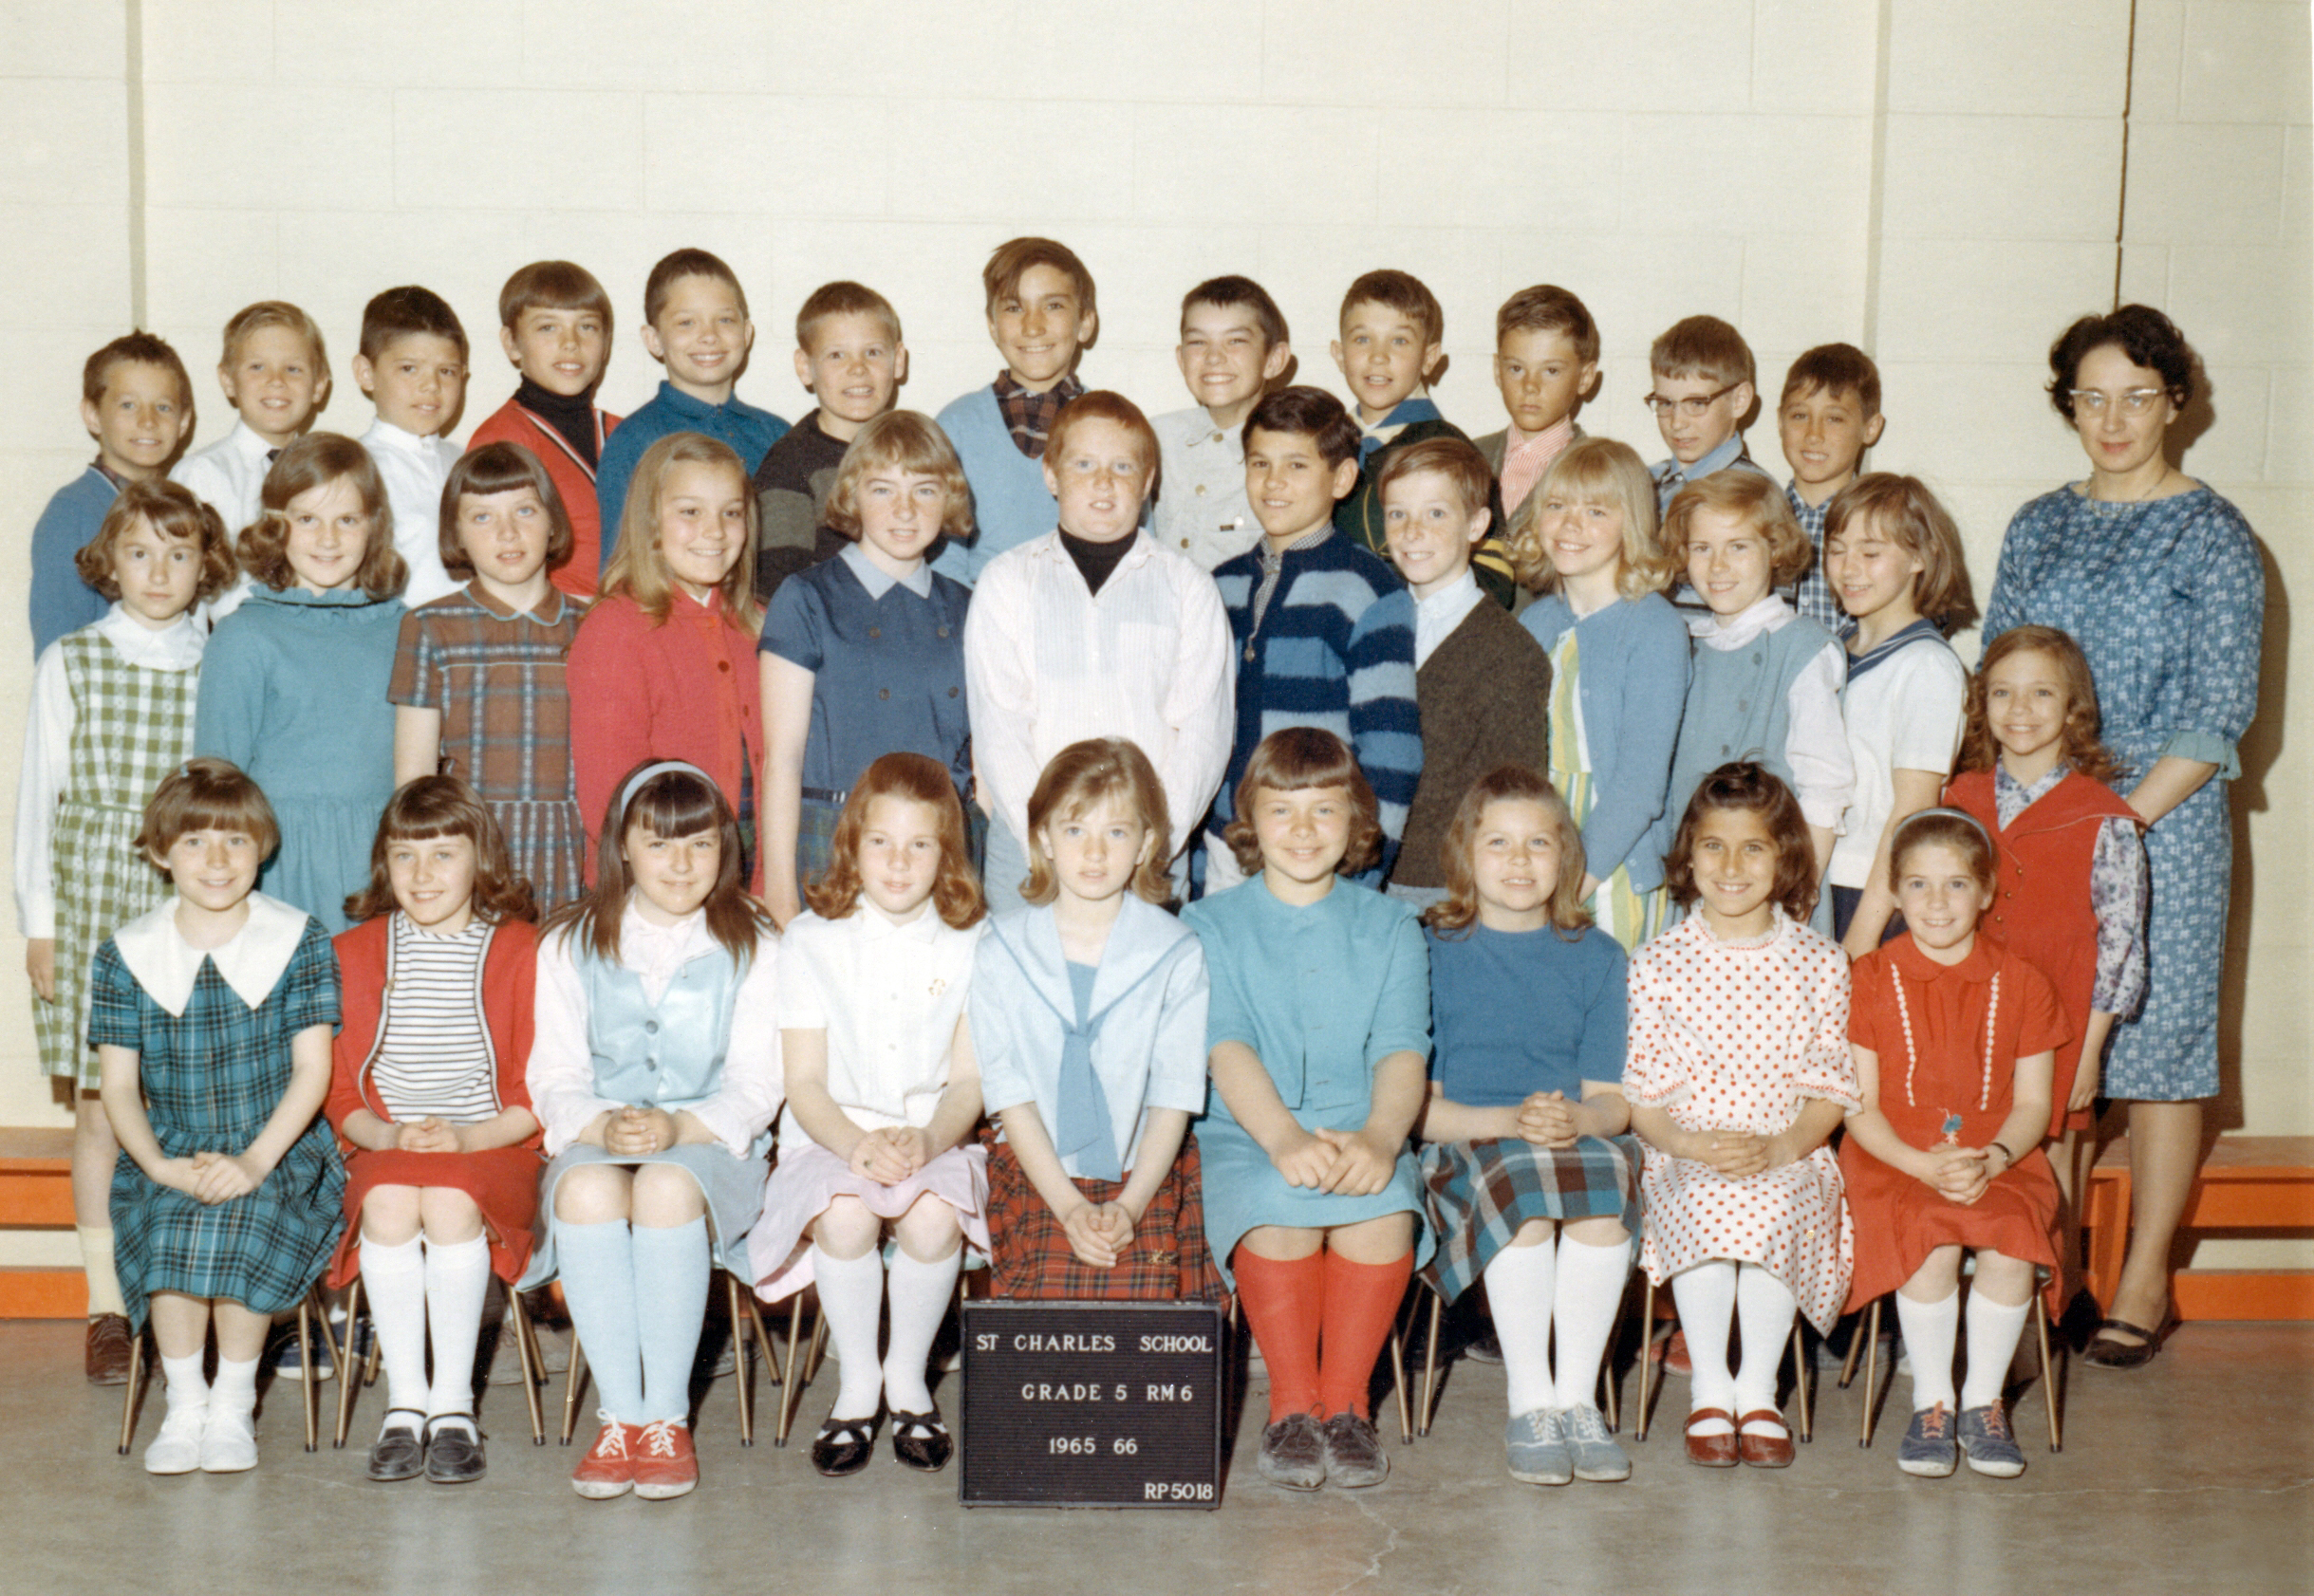 St. Charles School, Grade 5 1965-66 